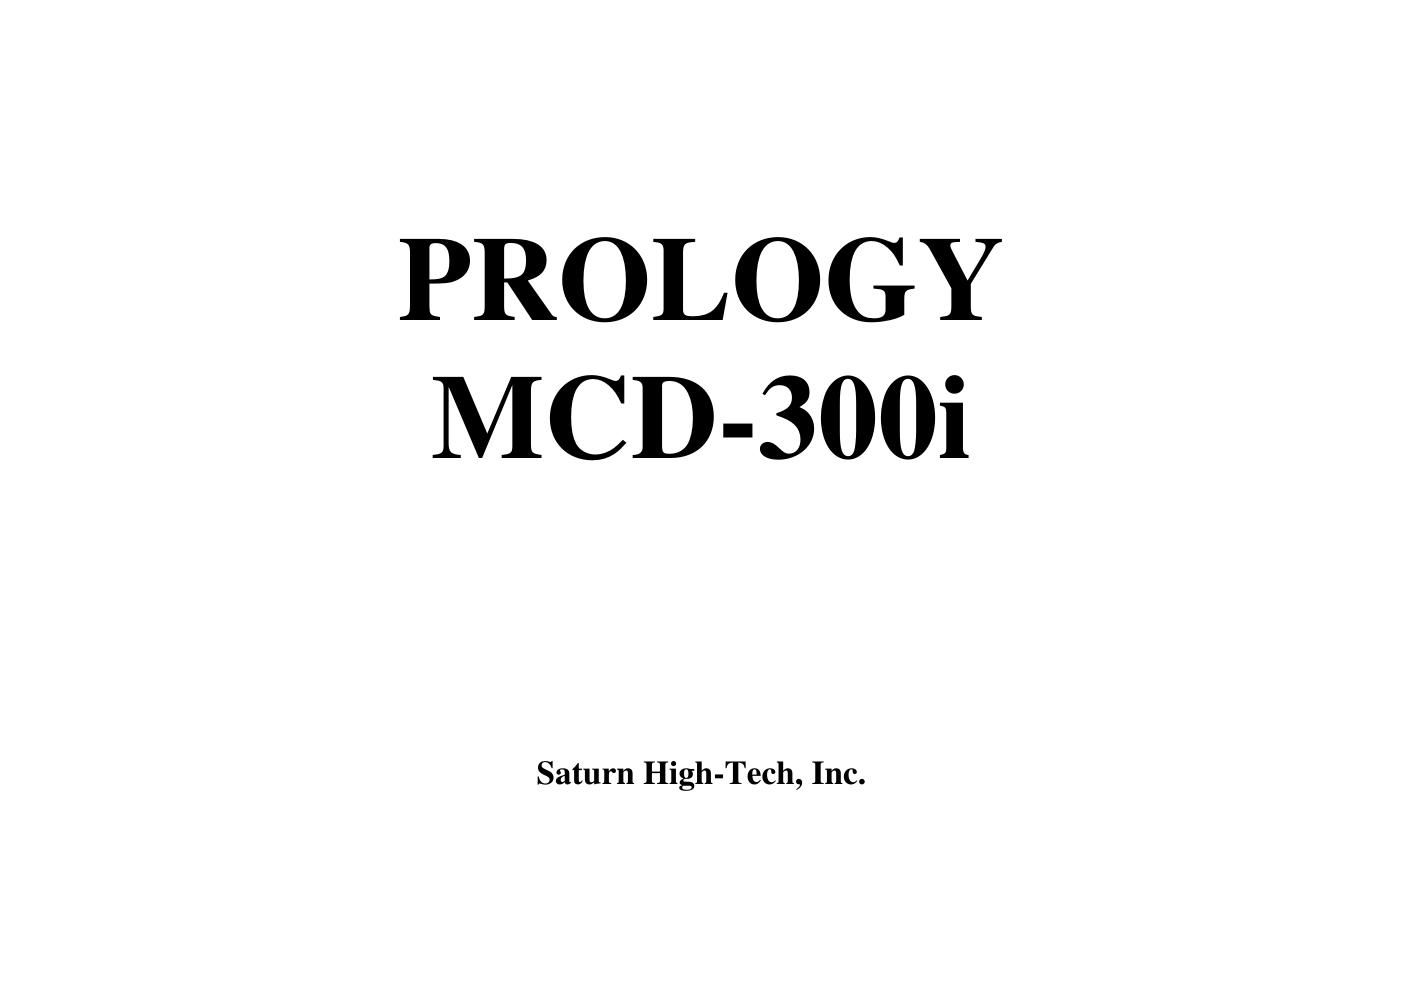 prology mcd 300 i schematic